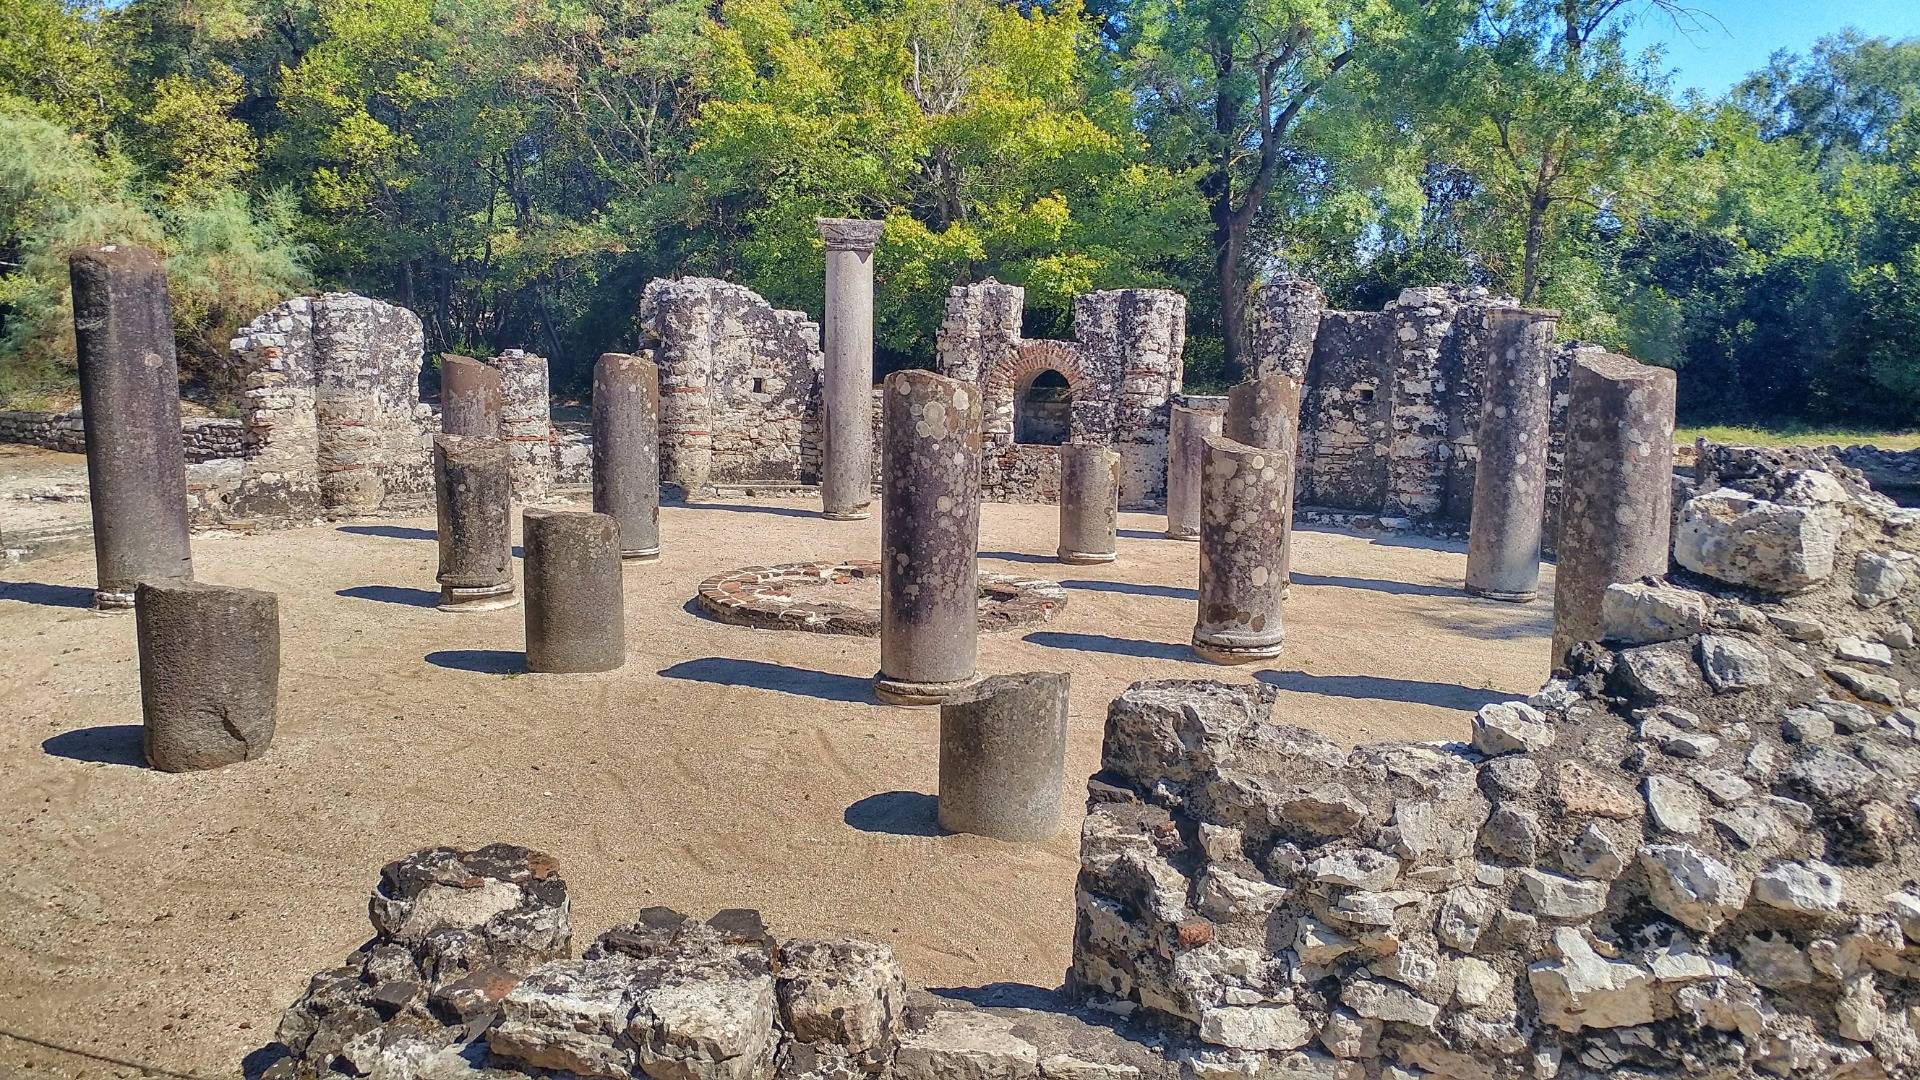 Columns like on a columns graveyard